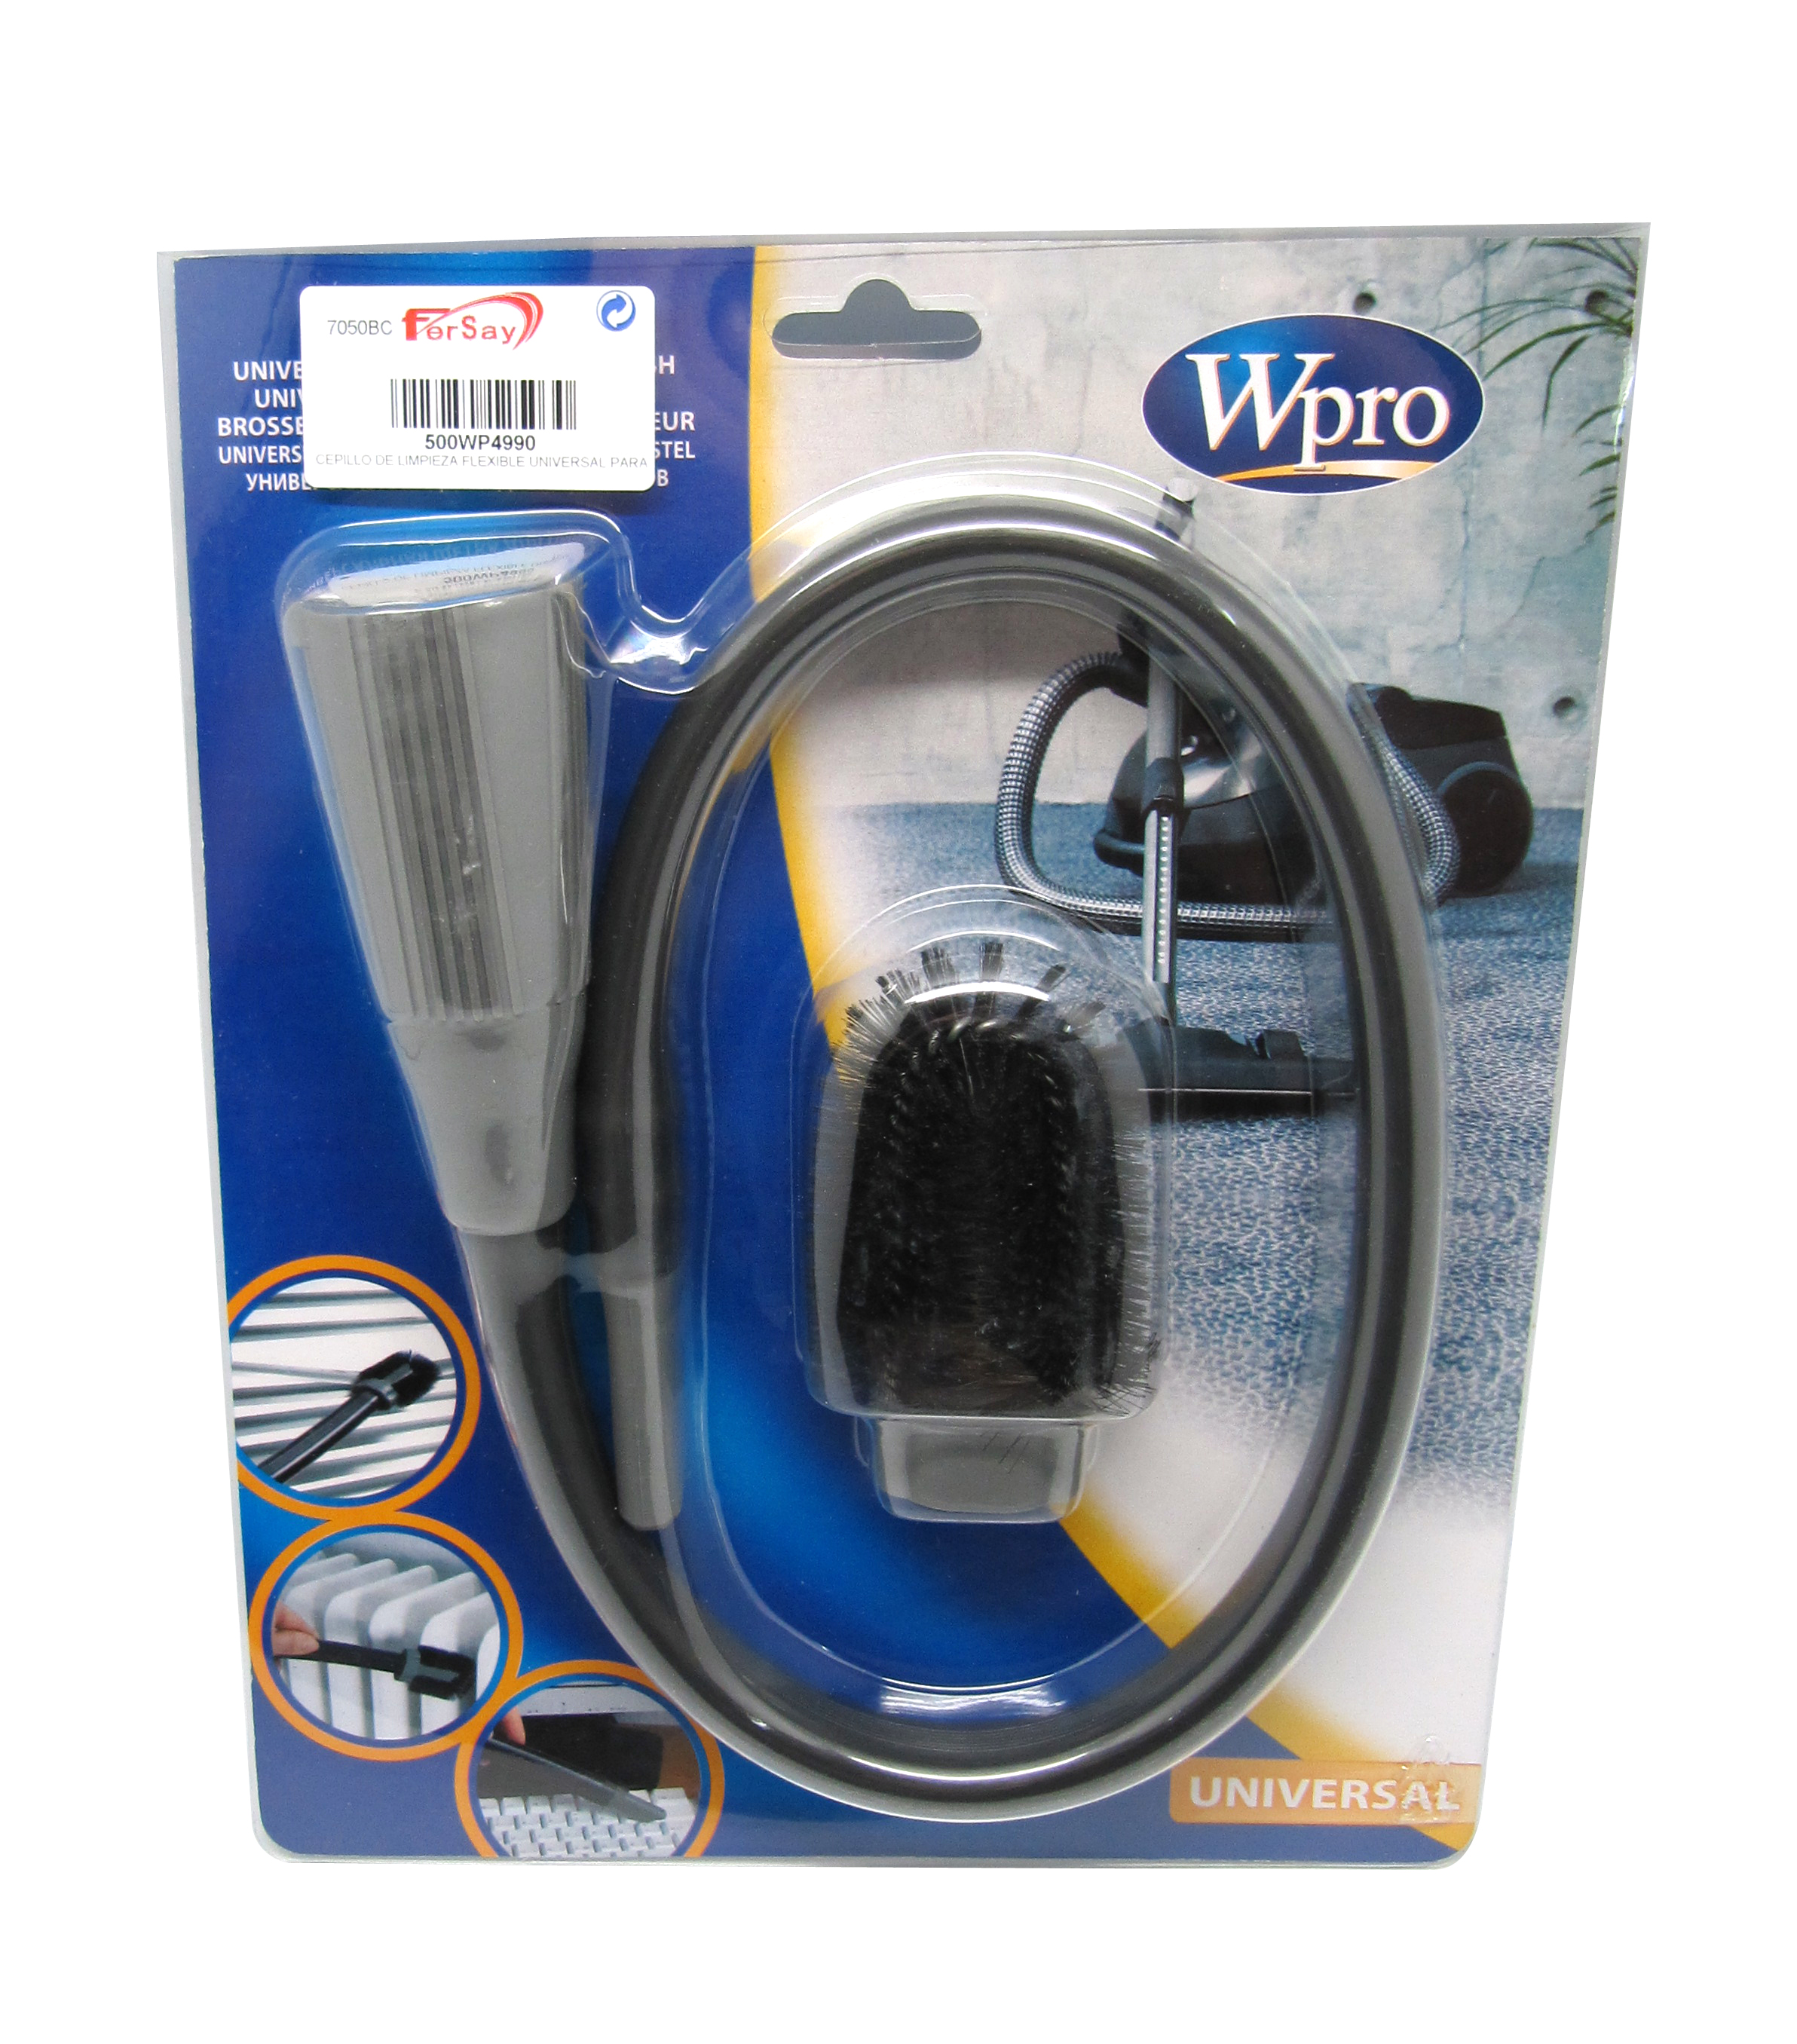 Cepillo limpieza flexible universal aspirador - 500WP4990 - WHIRLPOOL